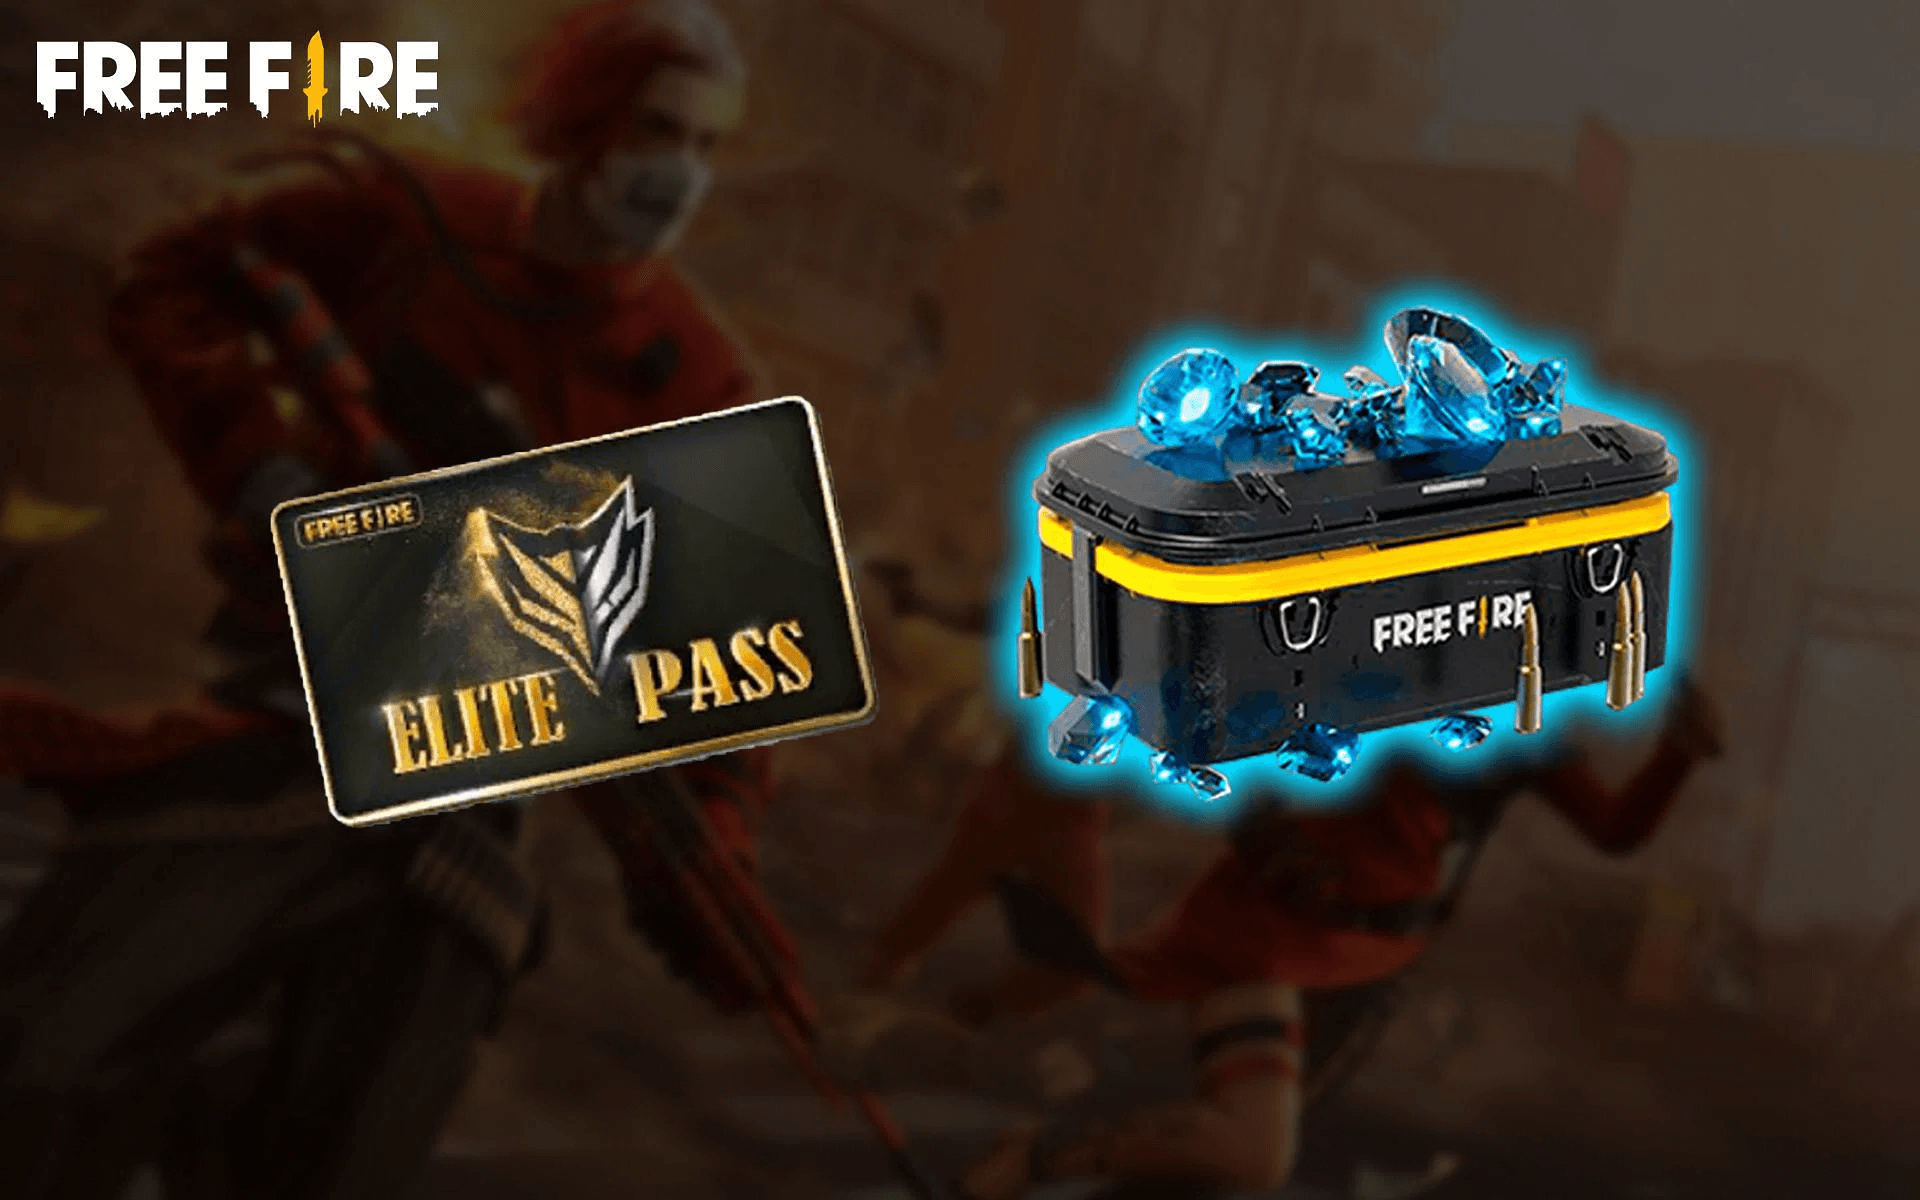 Garena Free Fire Elite Pass Season 47: Rewards, Release Date, Prices, and More